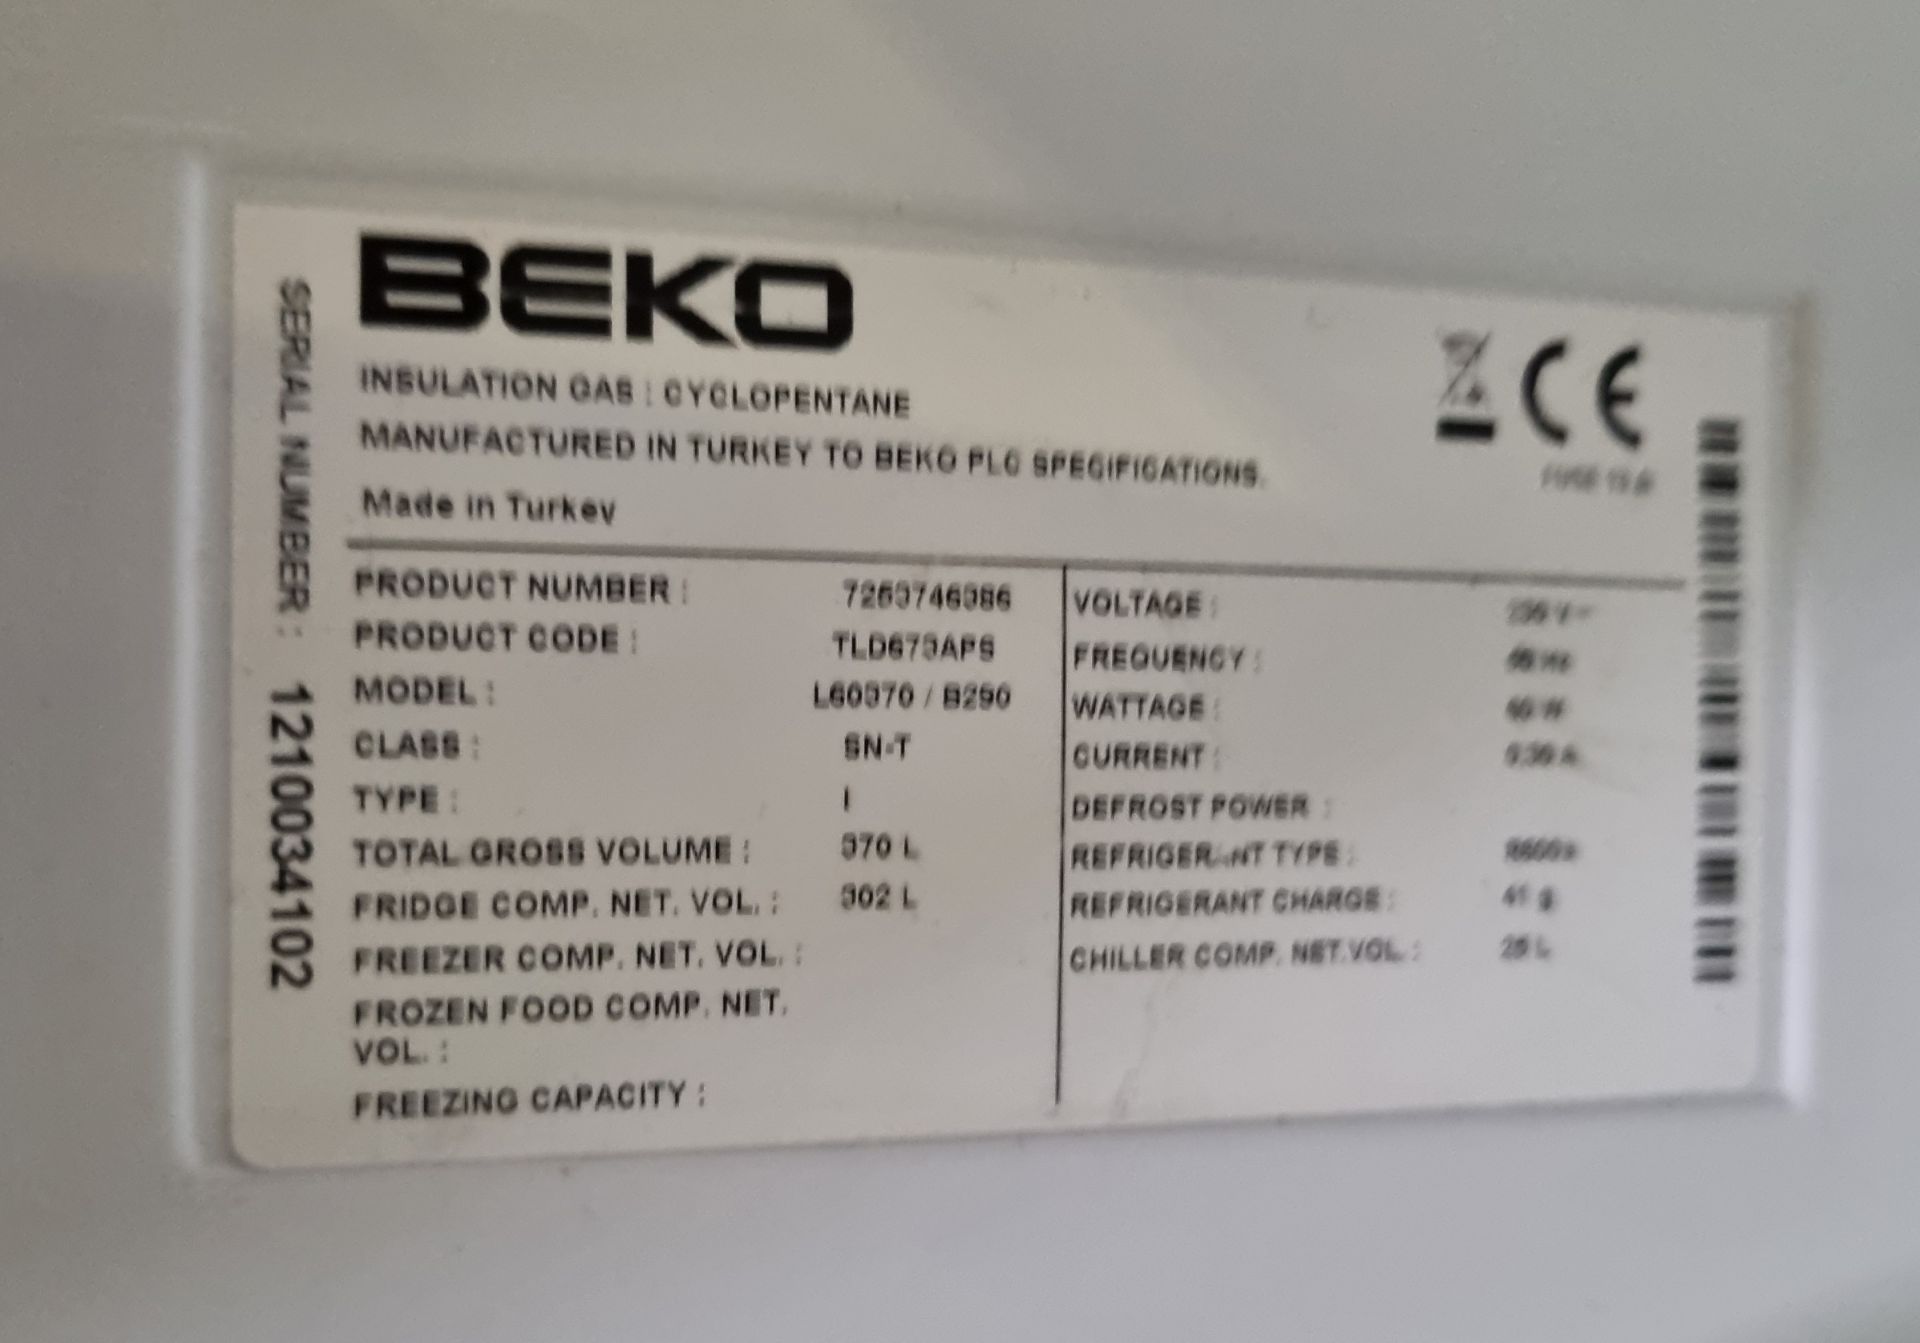 BEKO L60370 / B290 silver upright larder fridge with water dispenser - W 590 x D 630 x H 1690 mm - Image 4 of 4